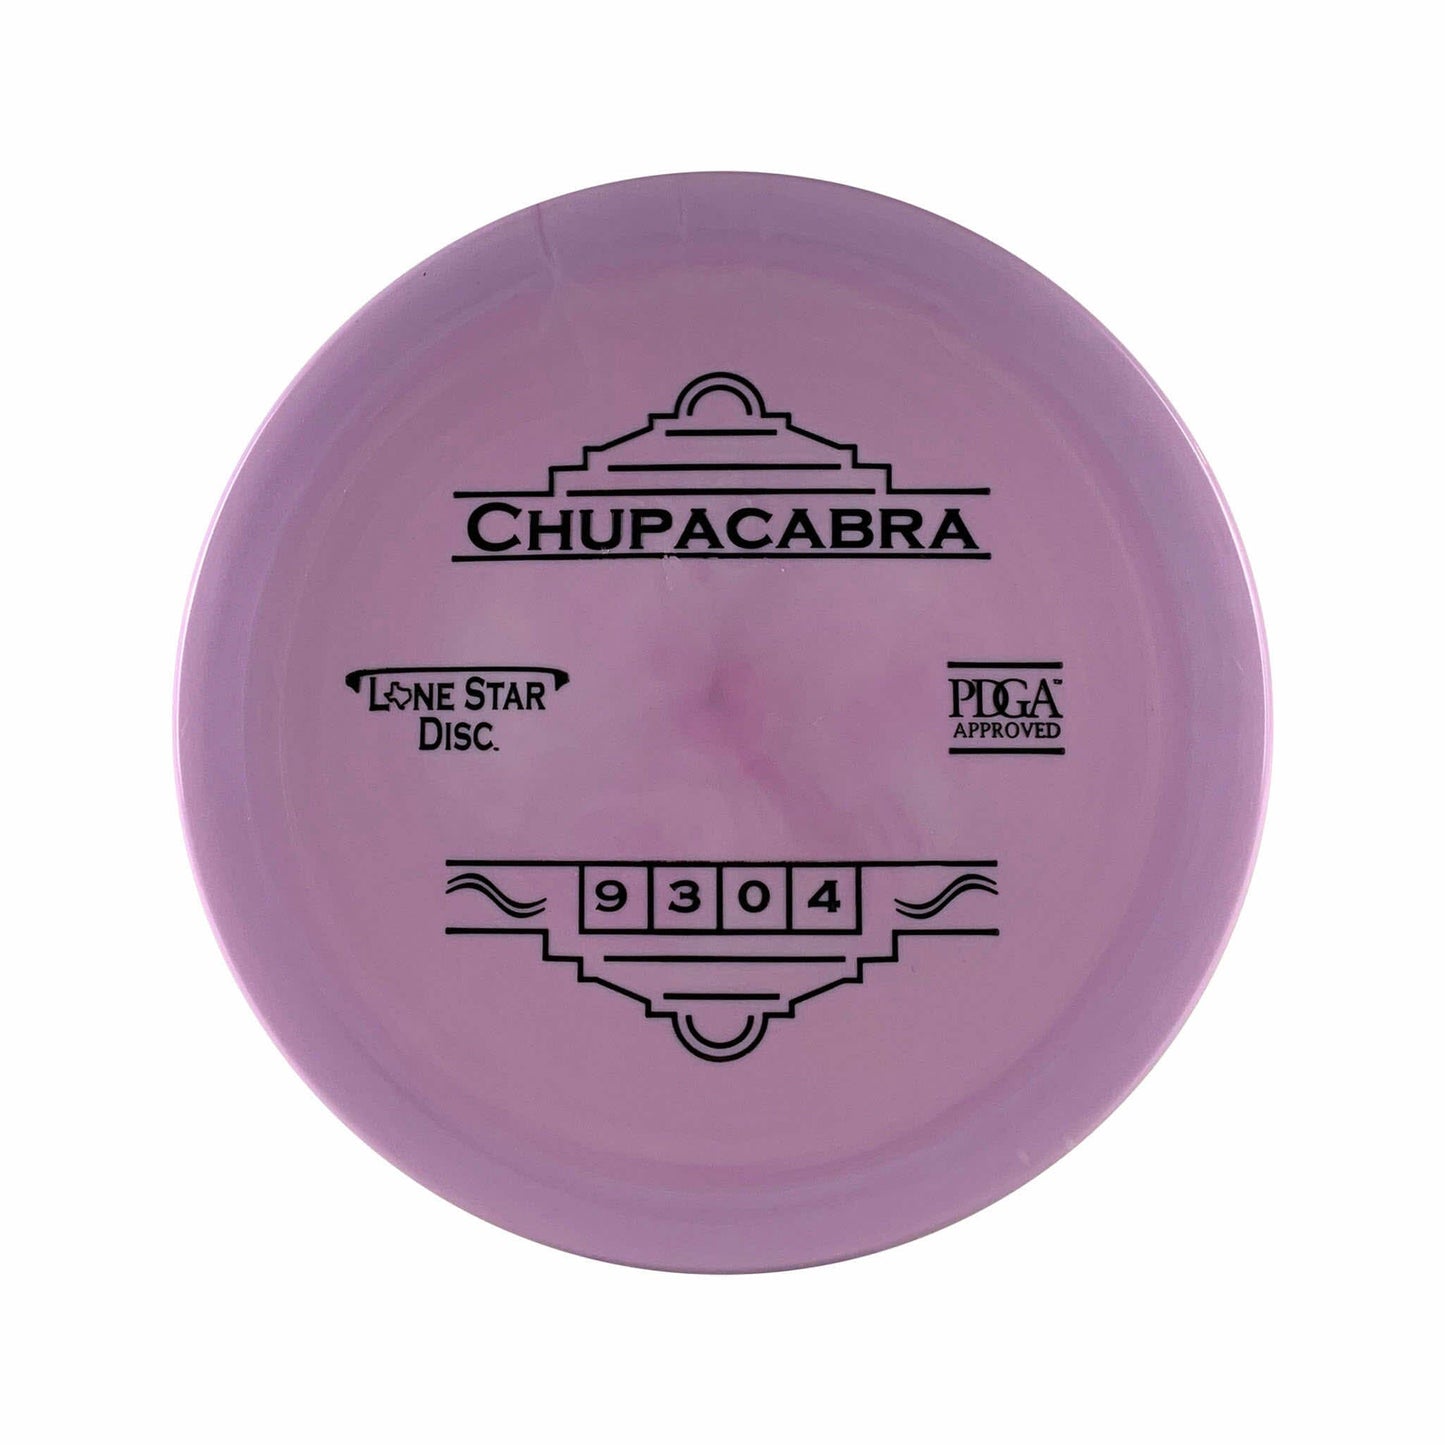 Lima Chupacabra Disc Lonestar Disc light purple 158 